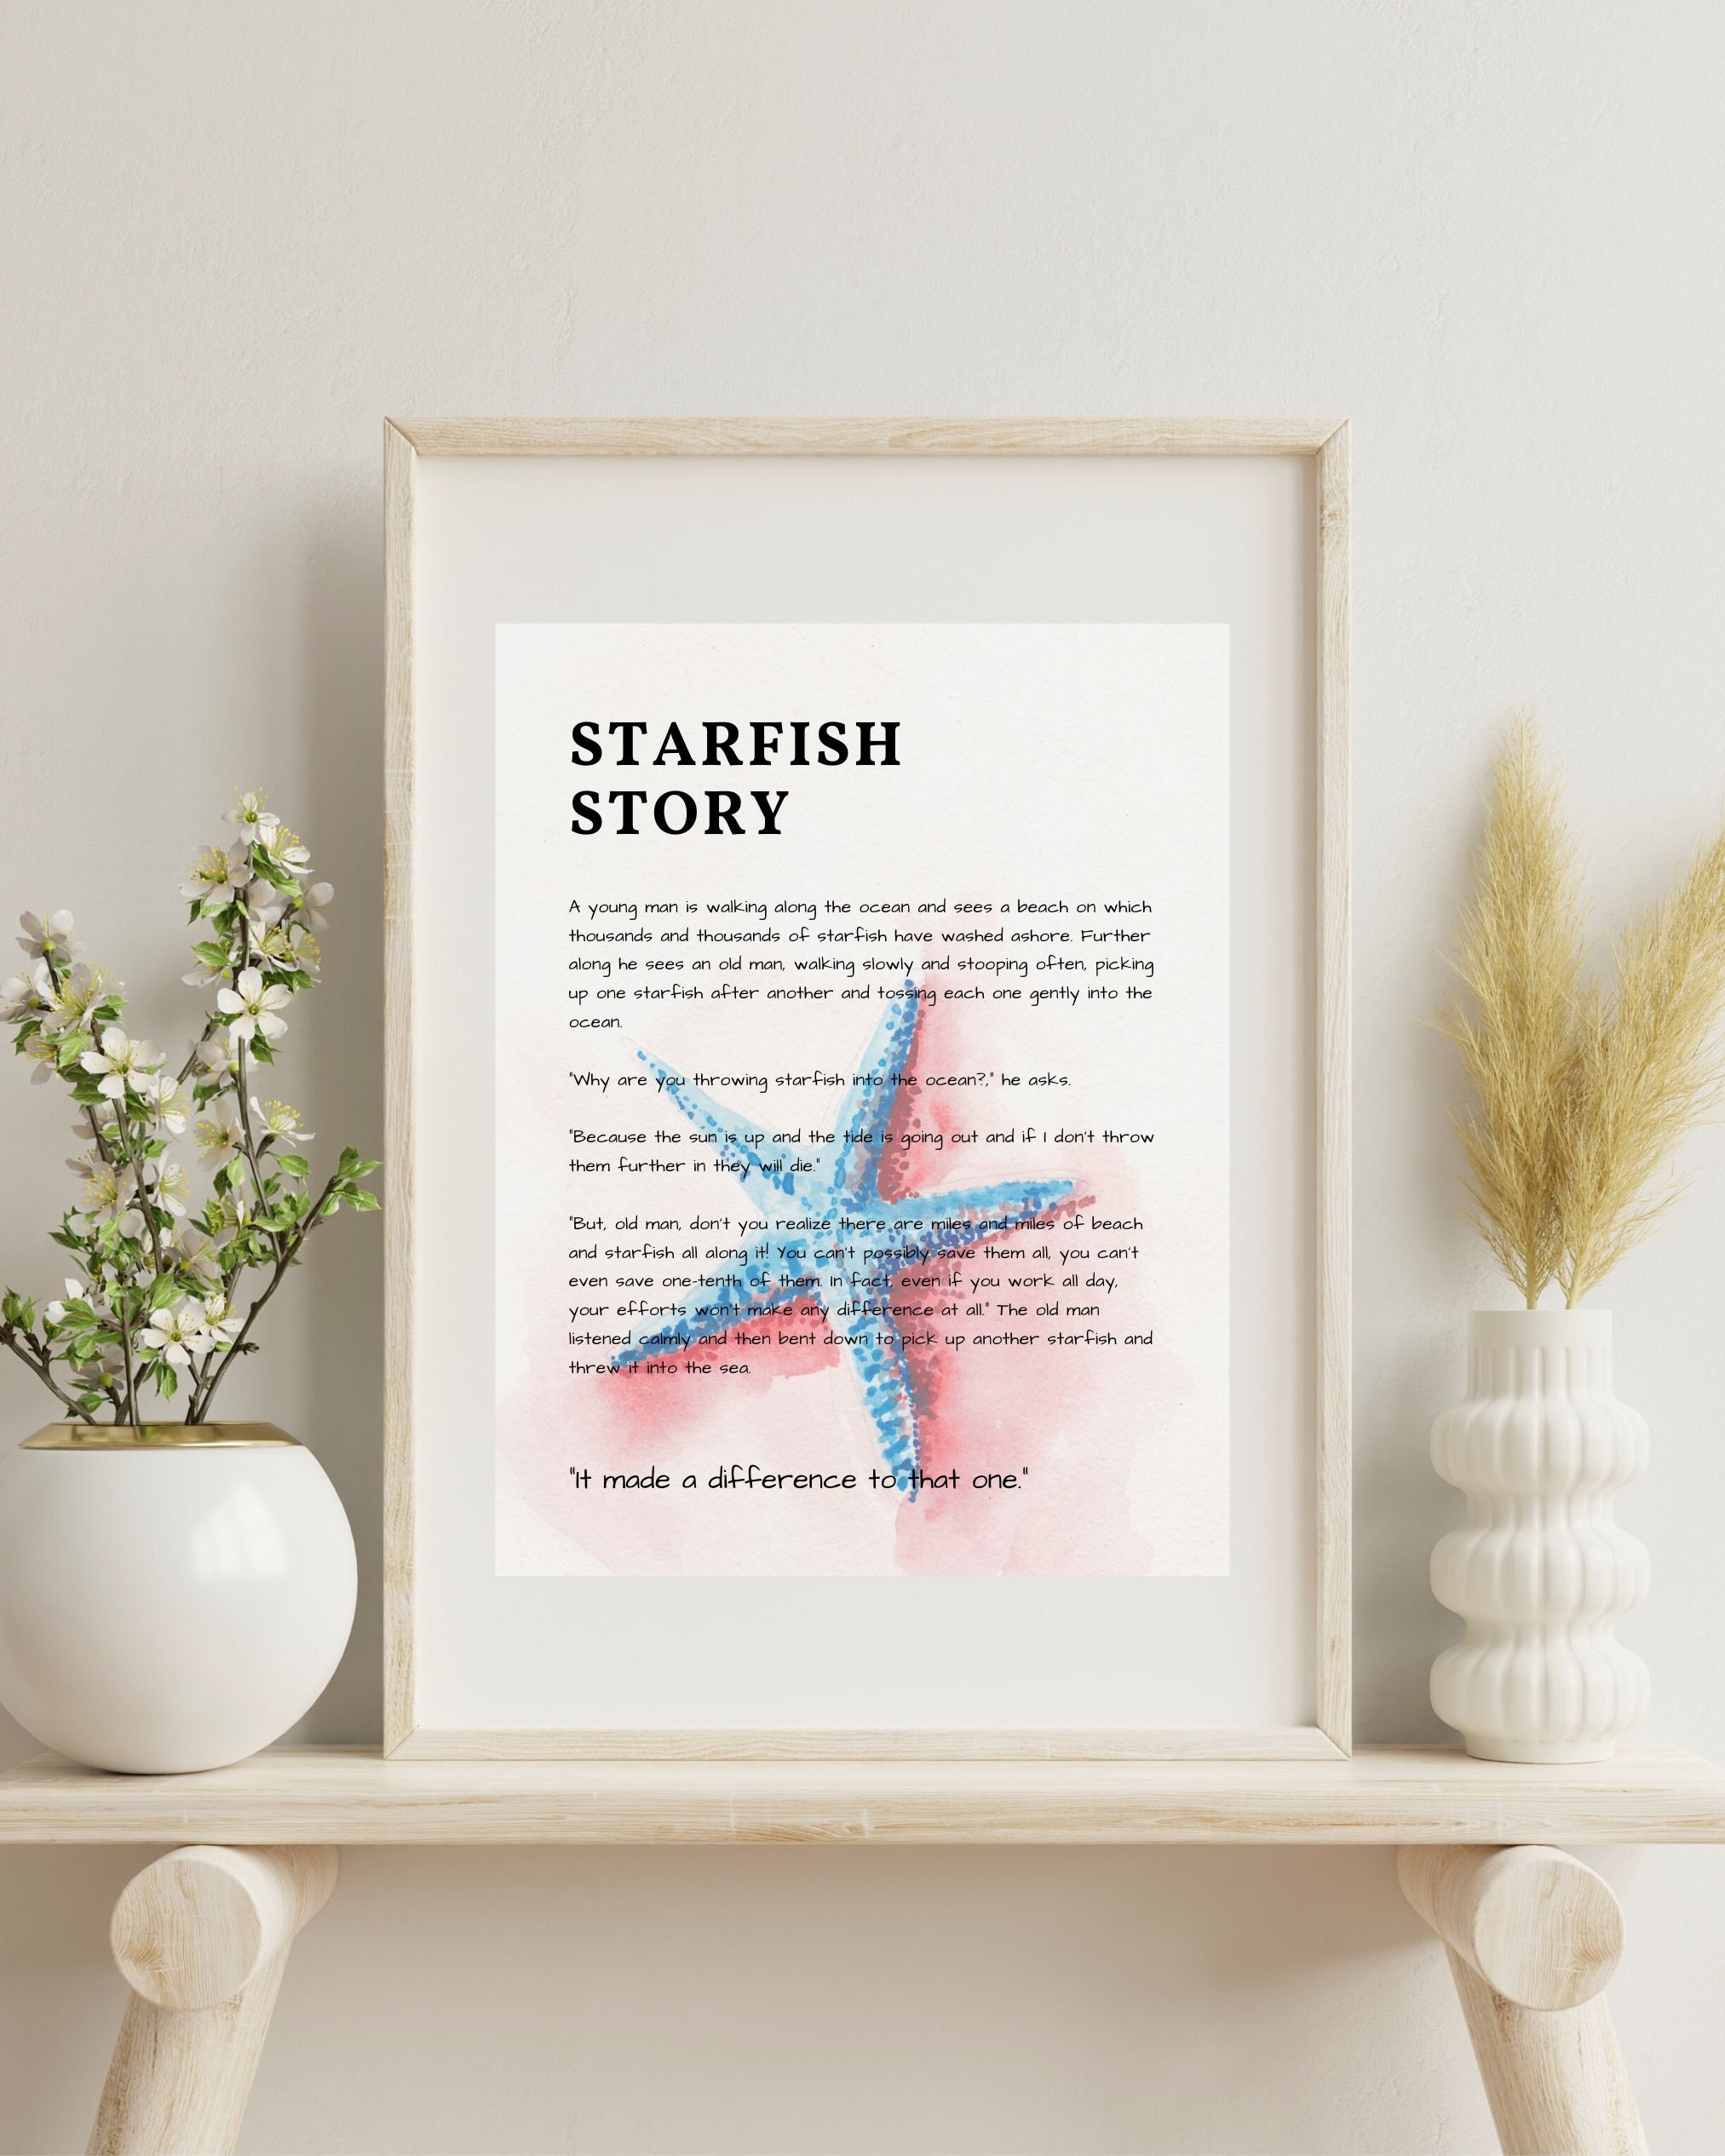 Apeirophobia Starfish Art Print for Sale by LouieChan